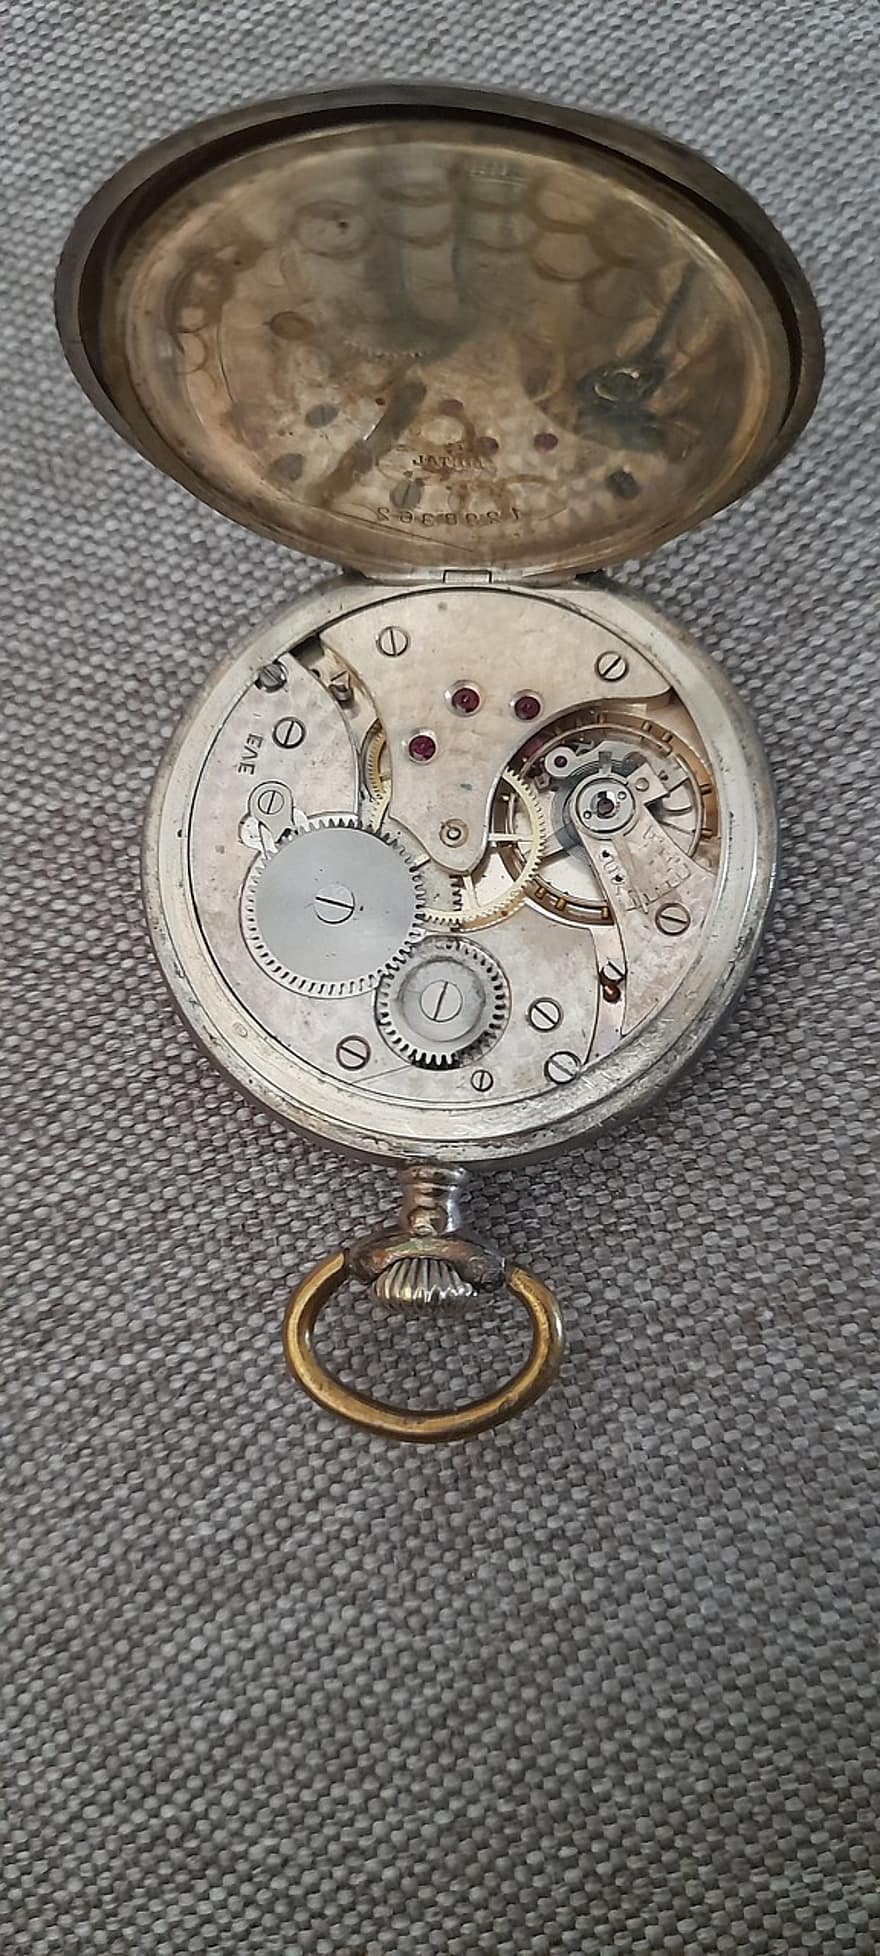 Look, Pocket Watch, Vintage Pocket Watch, Antique Pocket Watch, Watchmaking, Old, Used, Memories, Back, Hours, Minutes